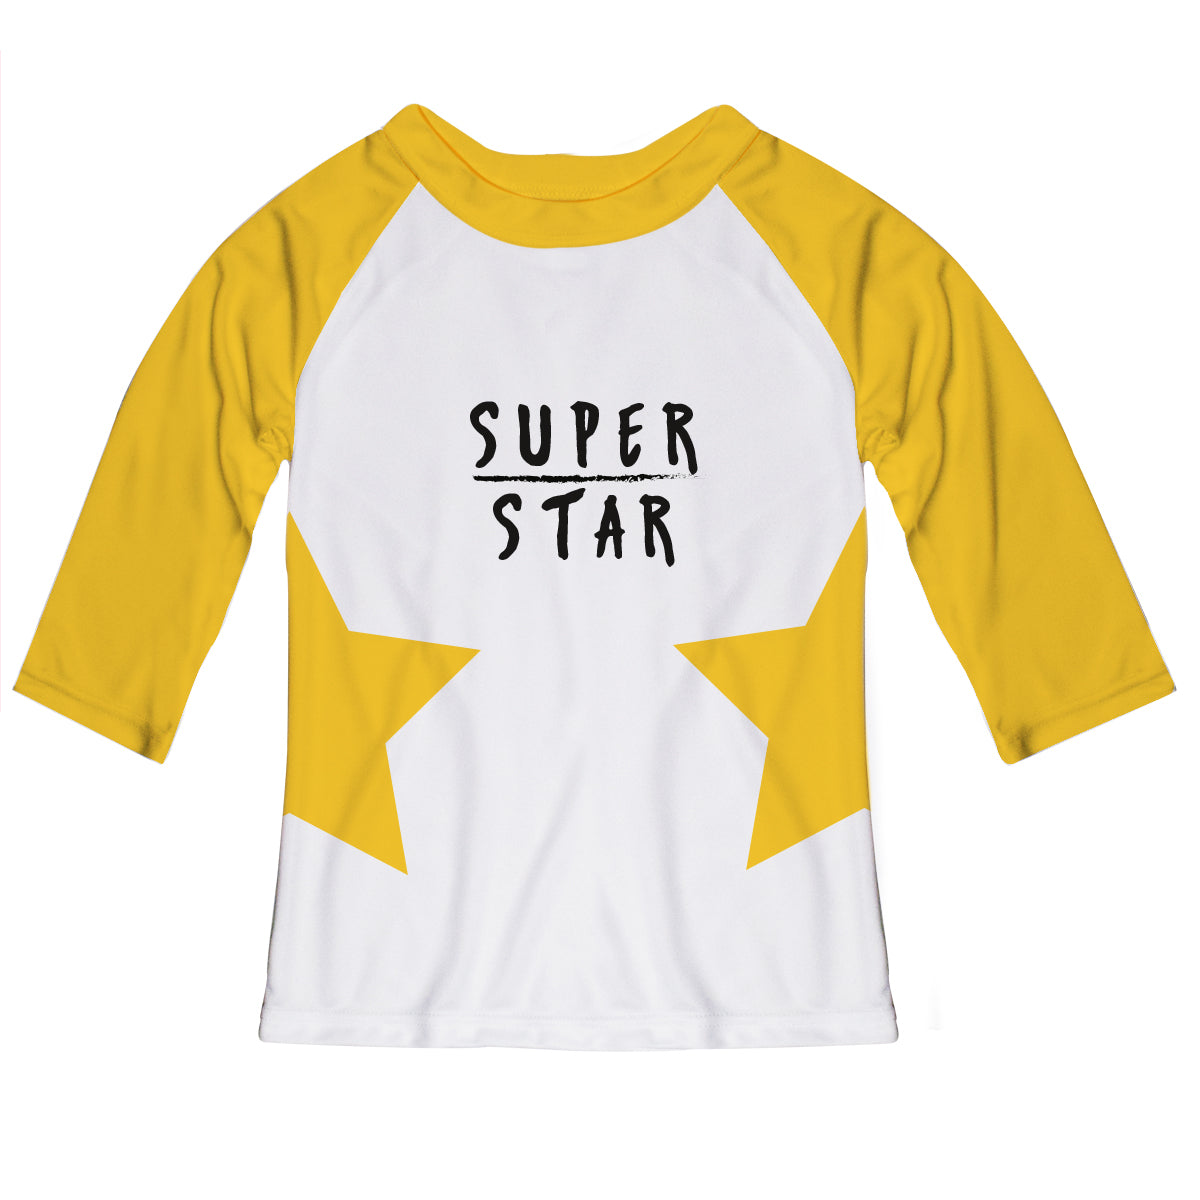 Super Star White and Yellow Raglan Tee Shirt 3/4 Sleeve